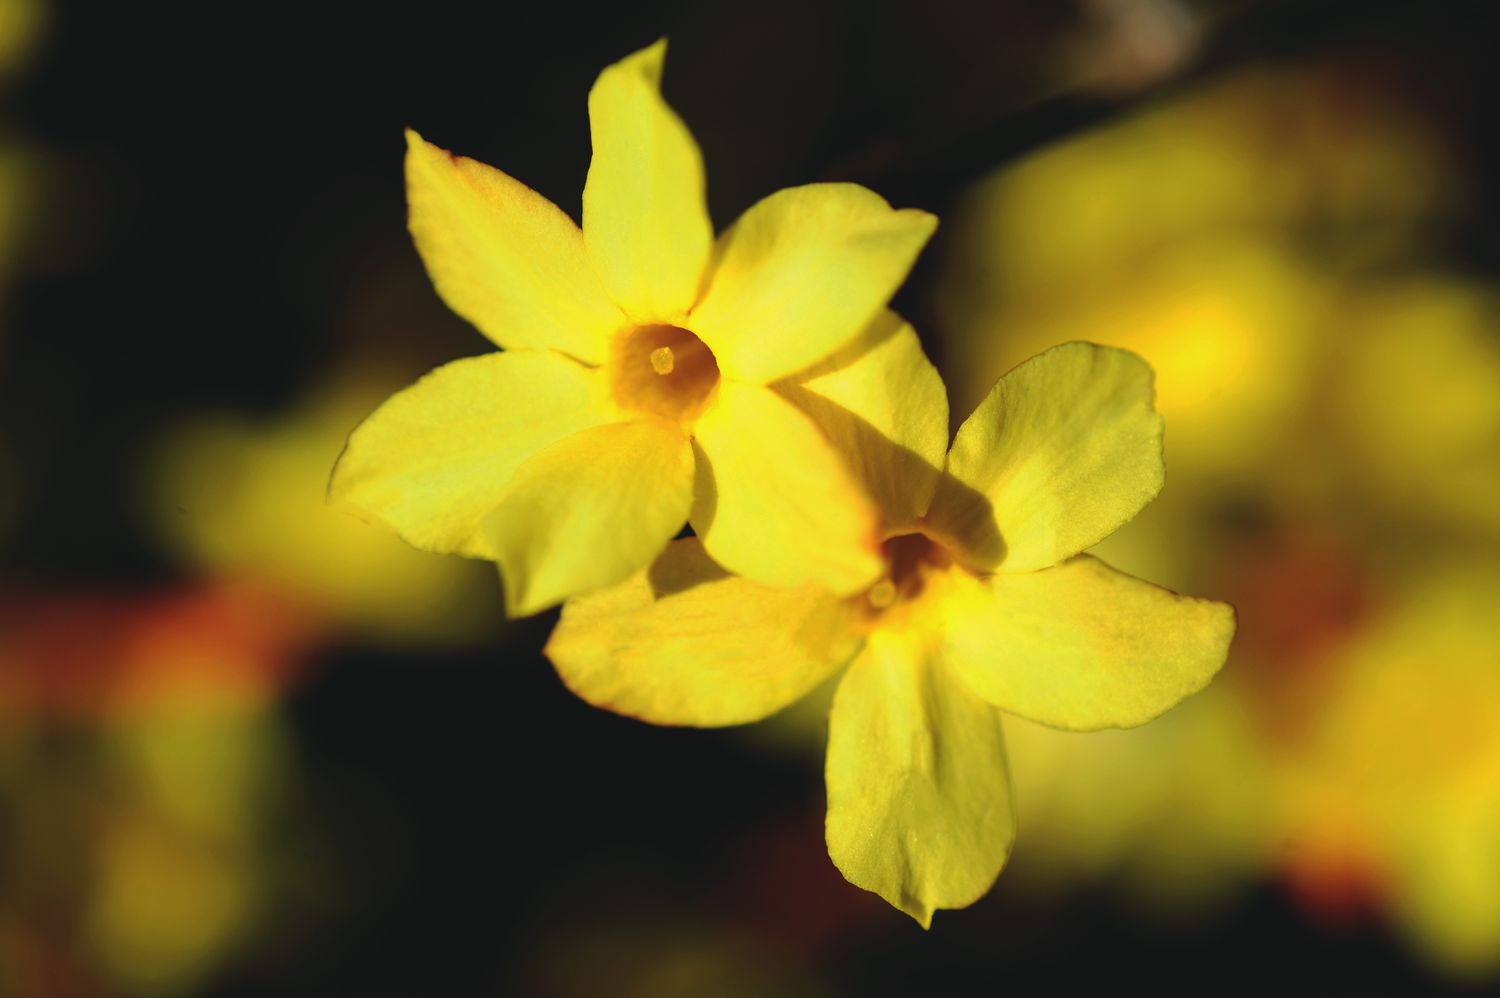 Winter jasmine with yellow flowers closeup